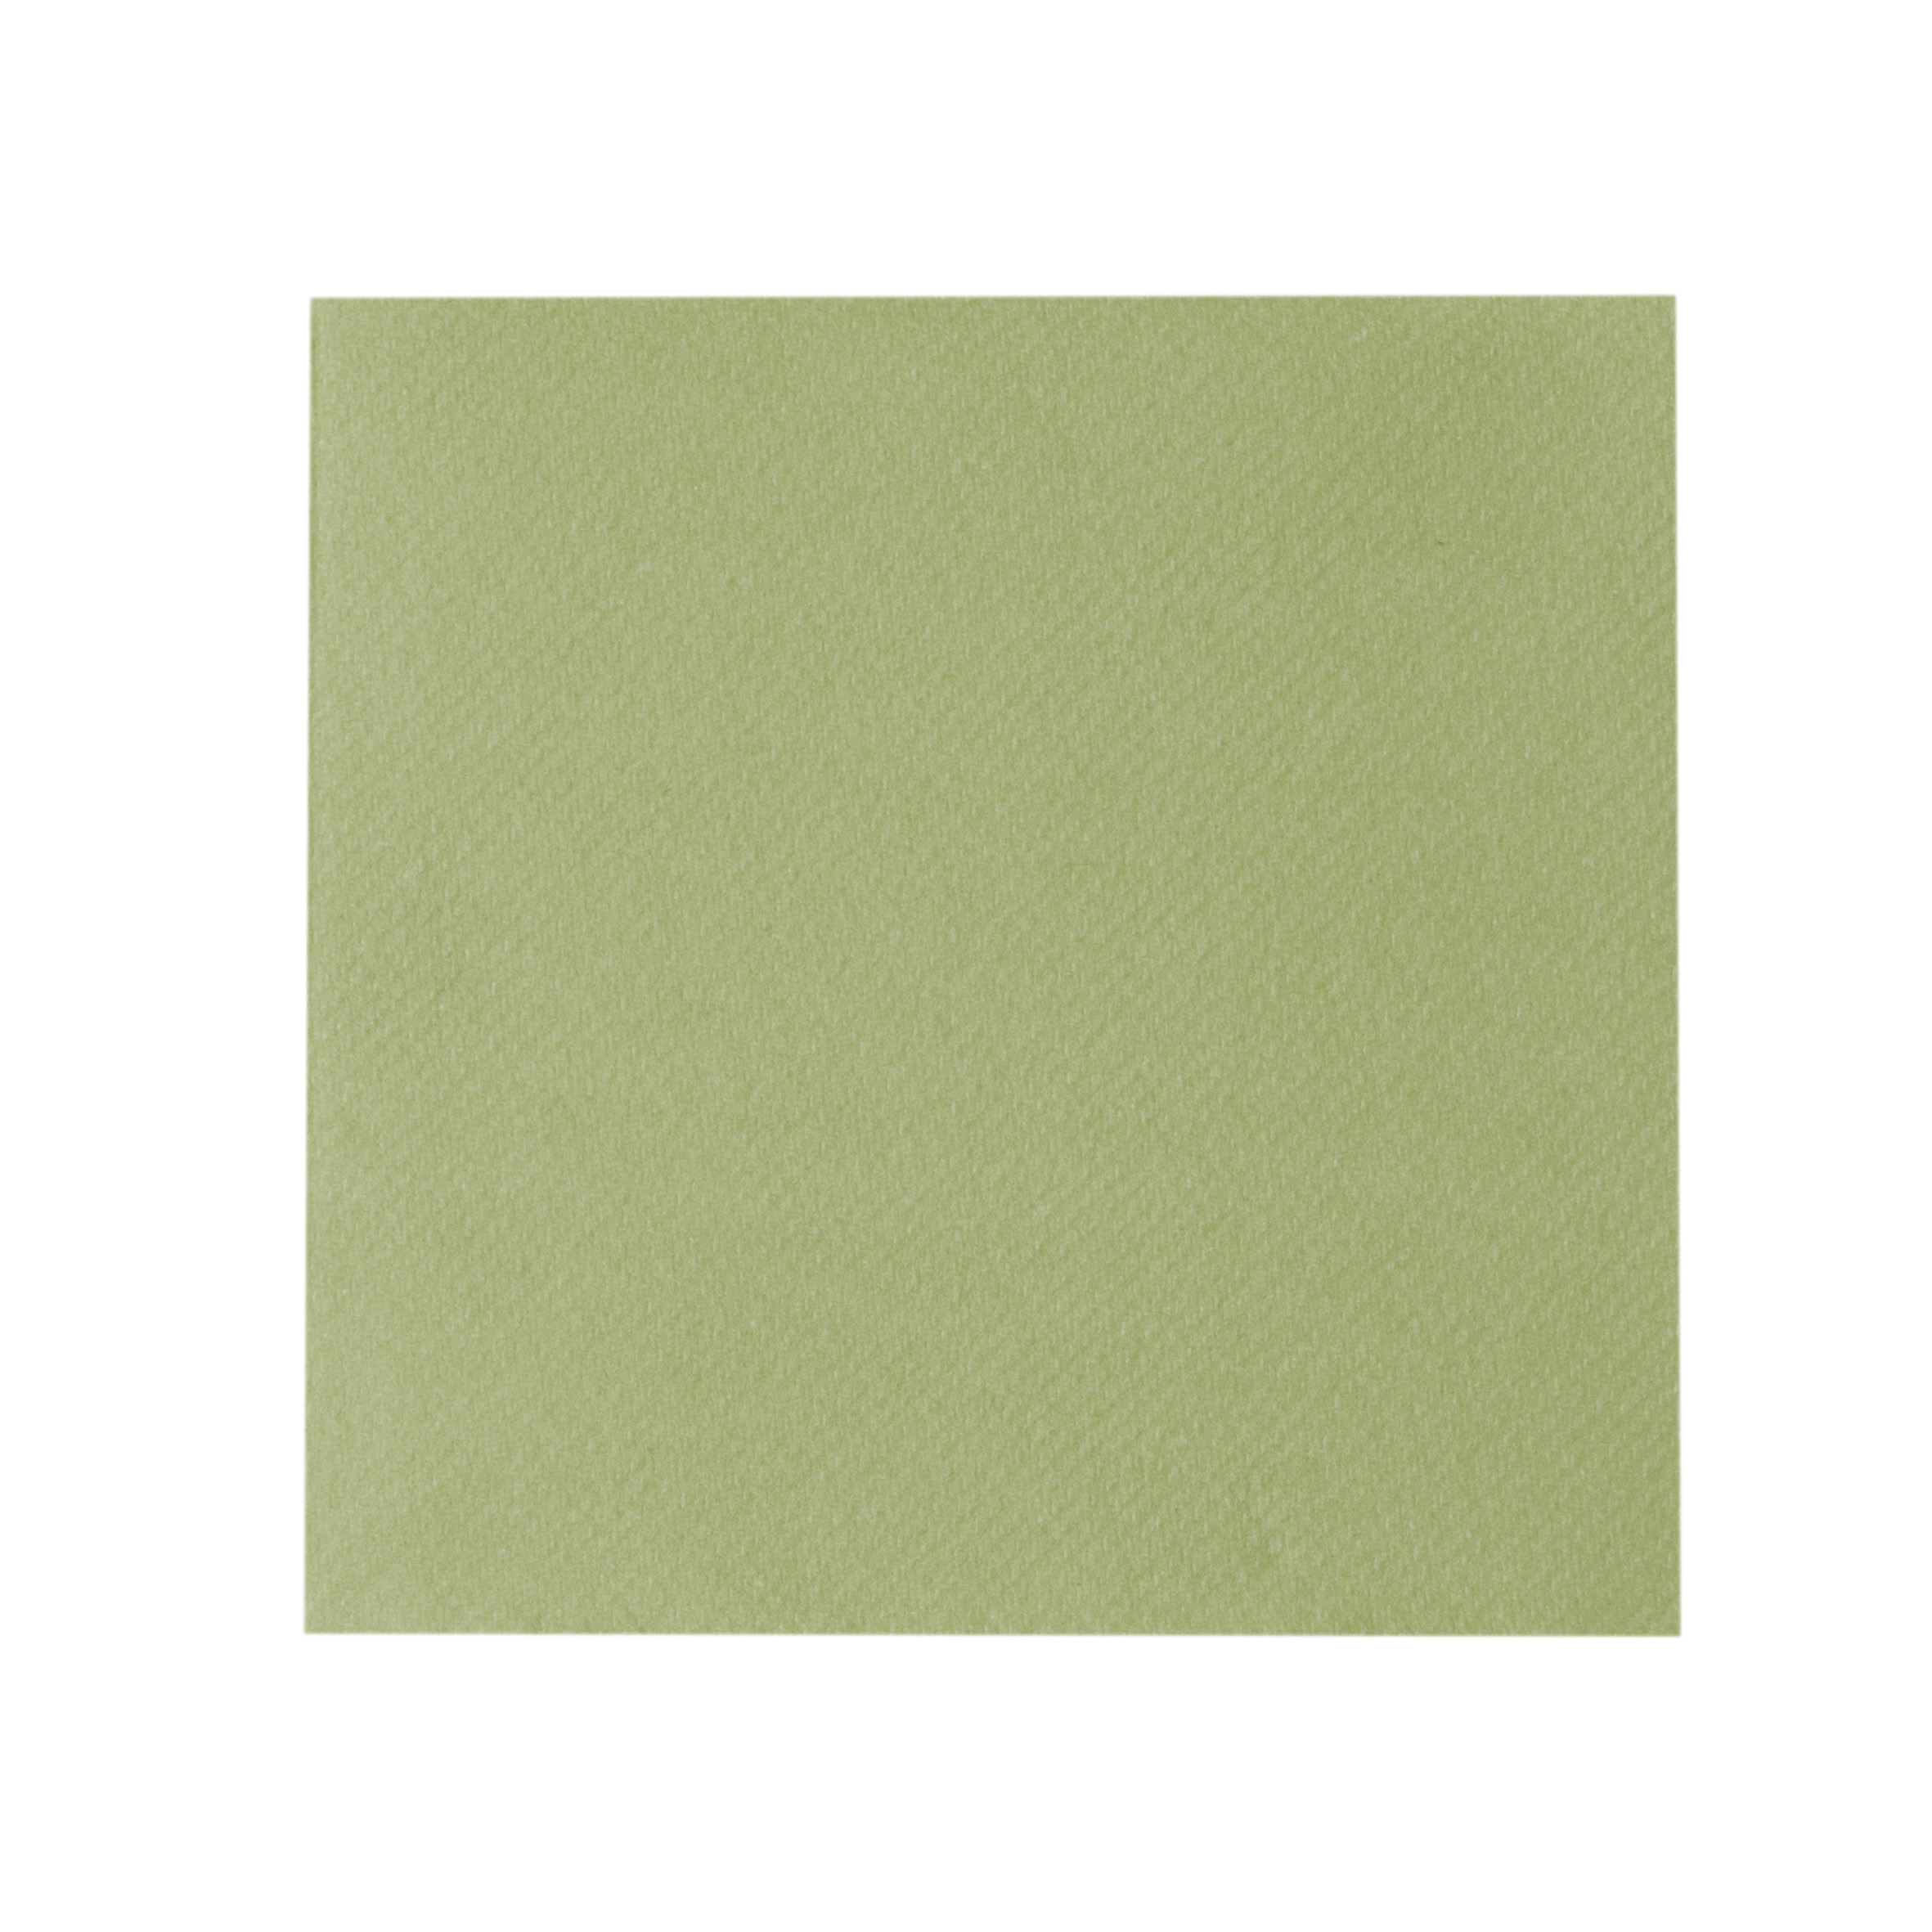 Mank Serviette Linclass-Light 1/4 Falz, 24 x 24 cm, Basic oliv